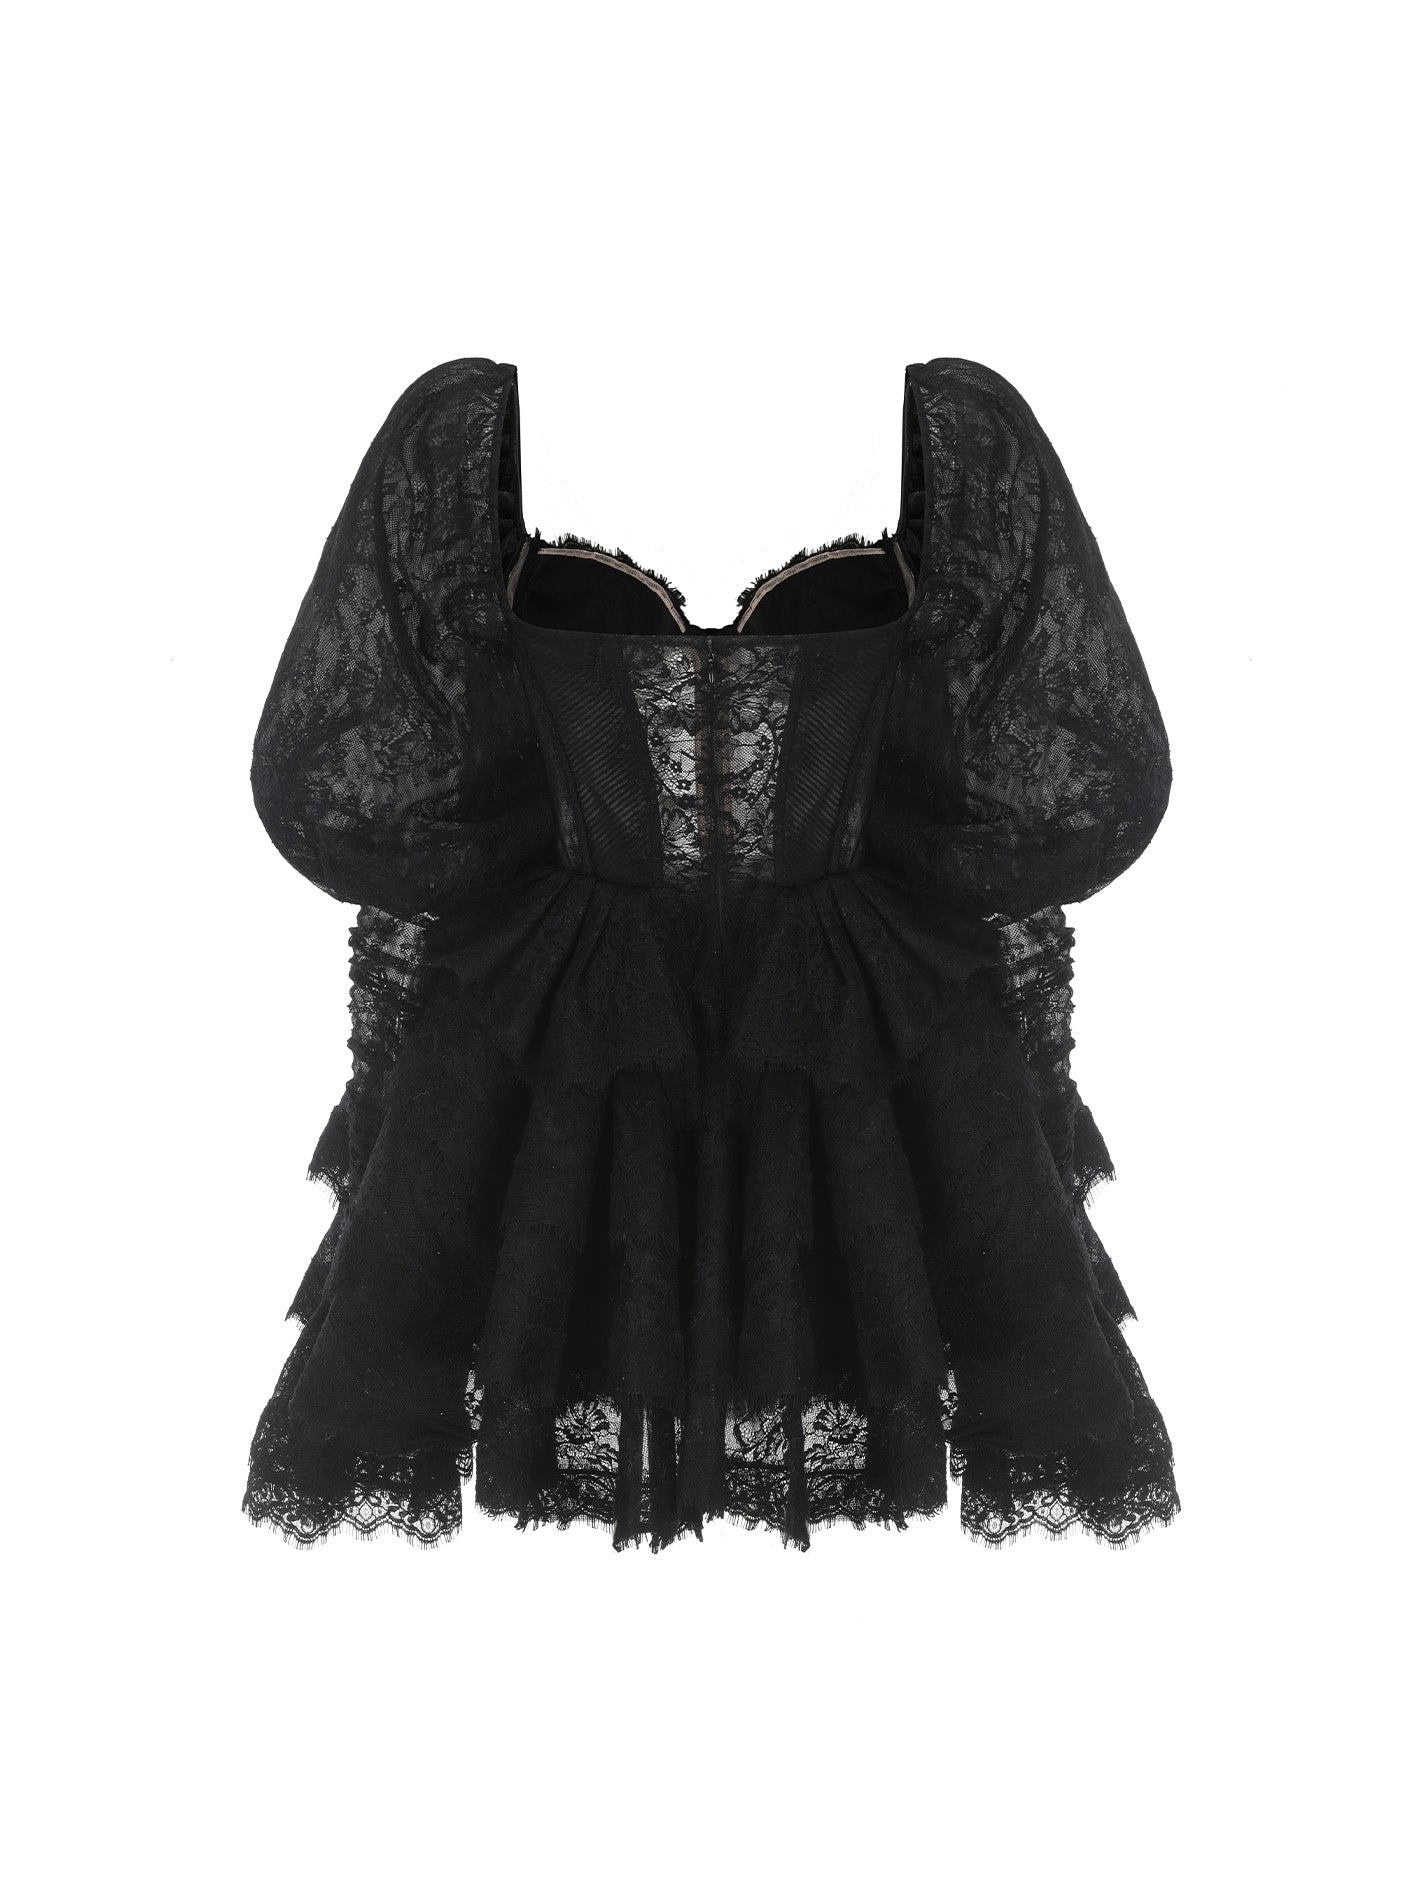 Penelope Lace Dress (Black)